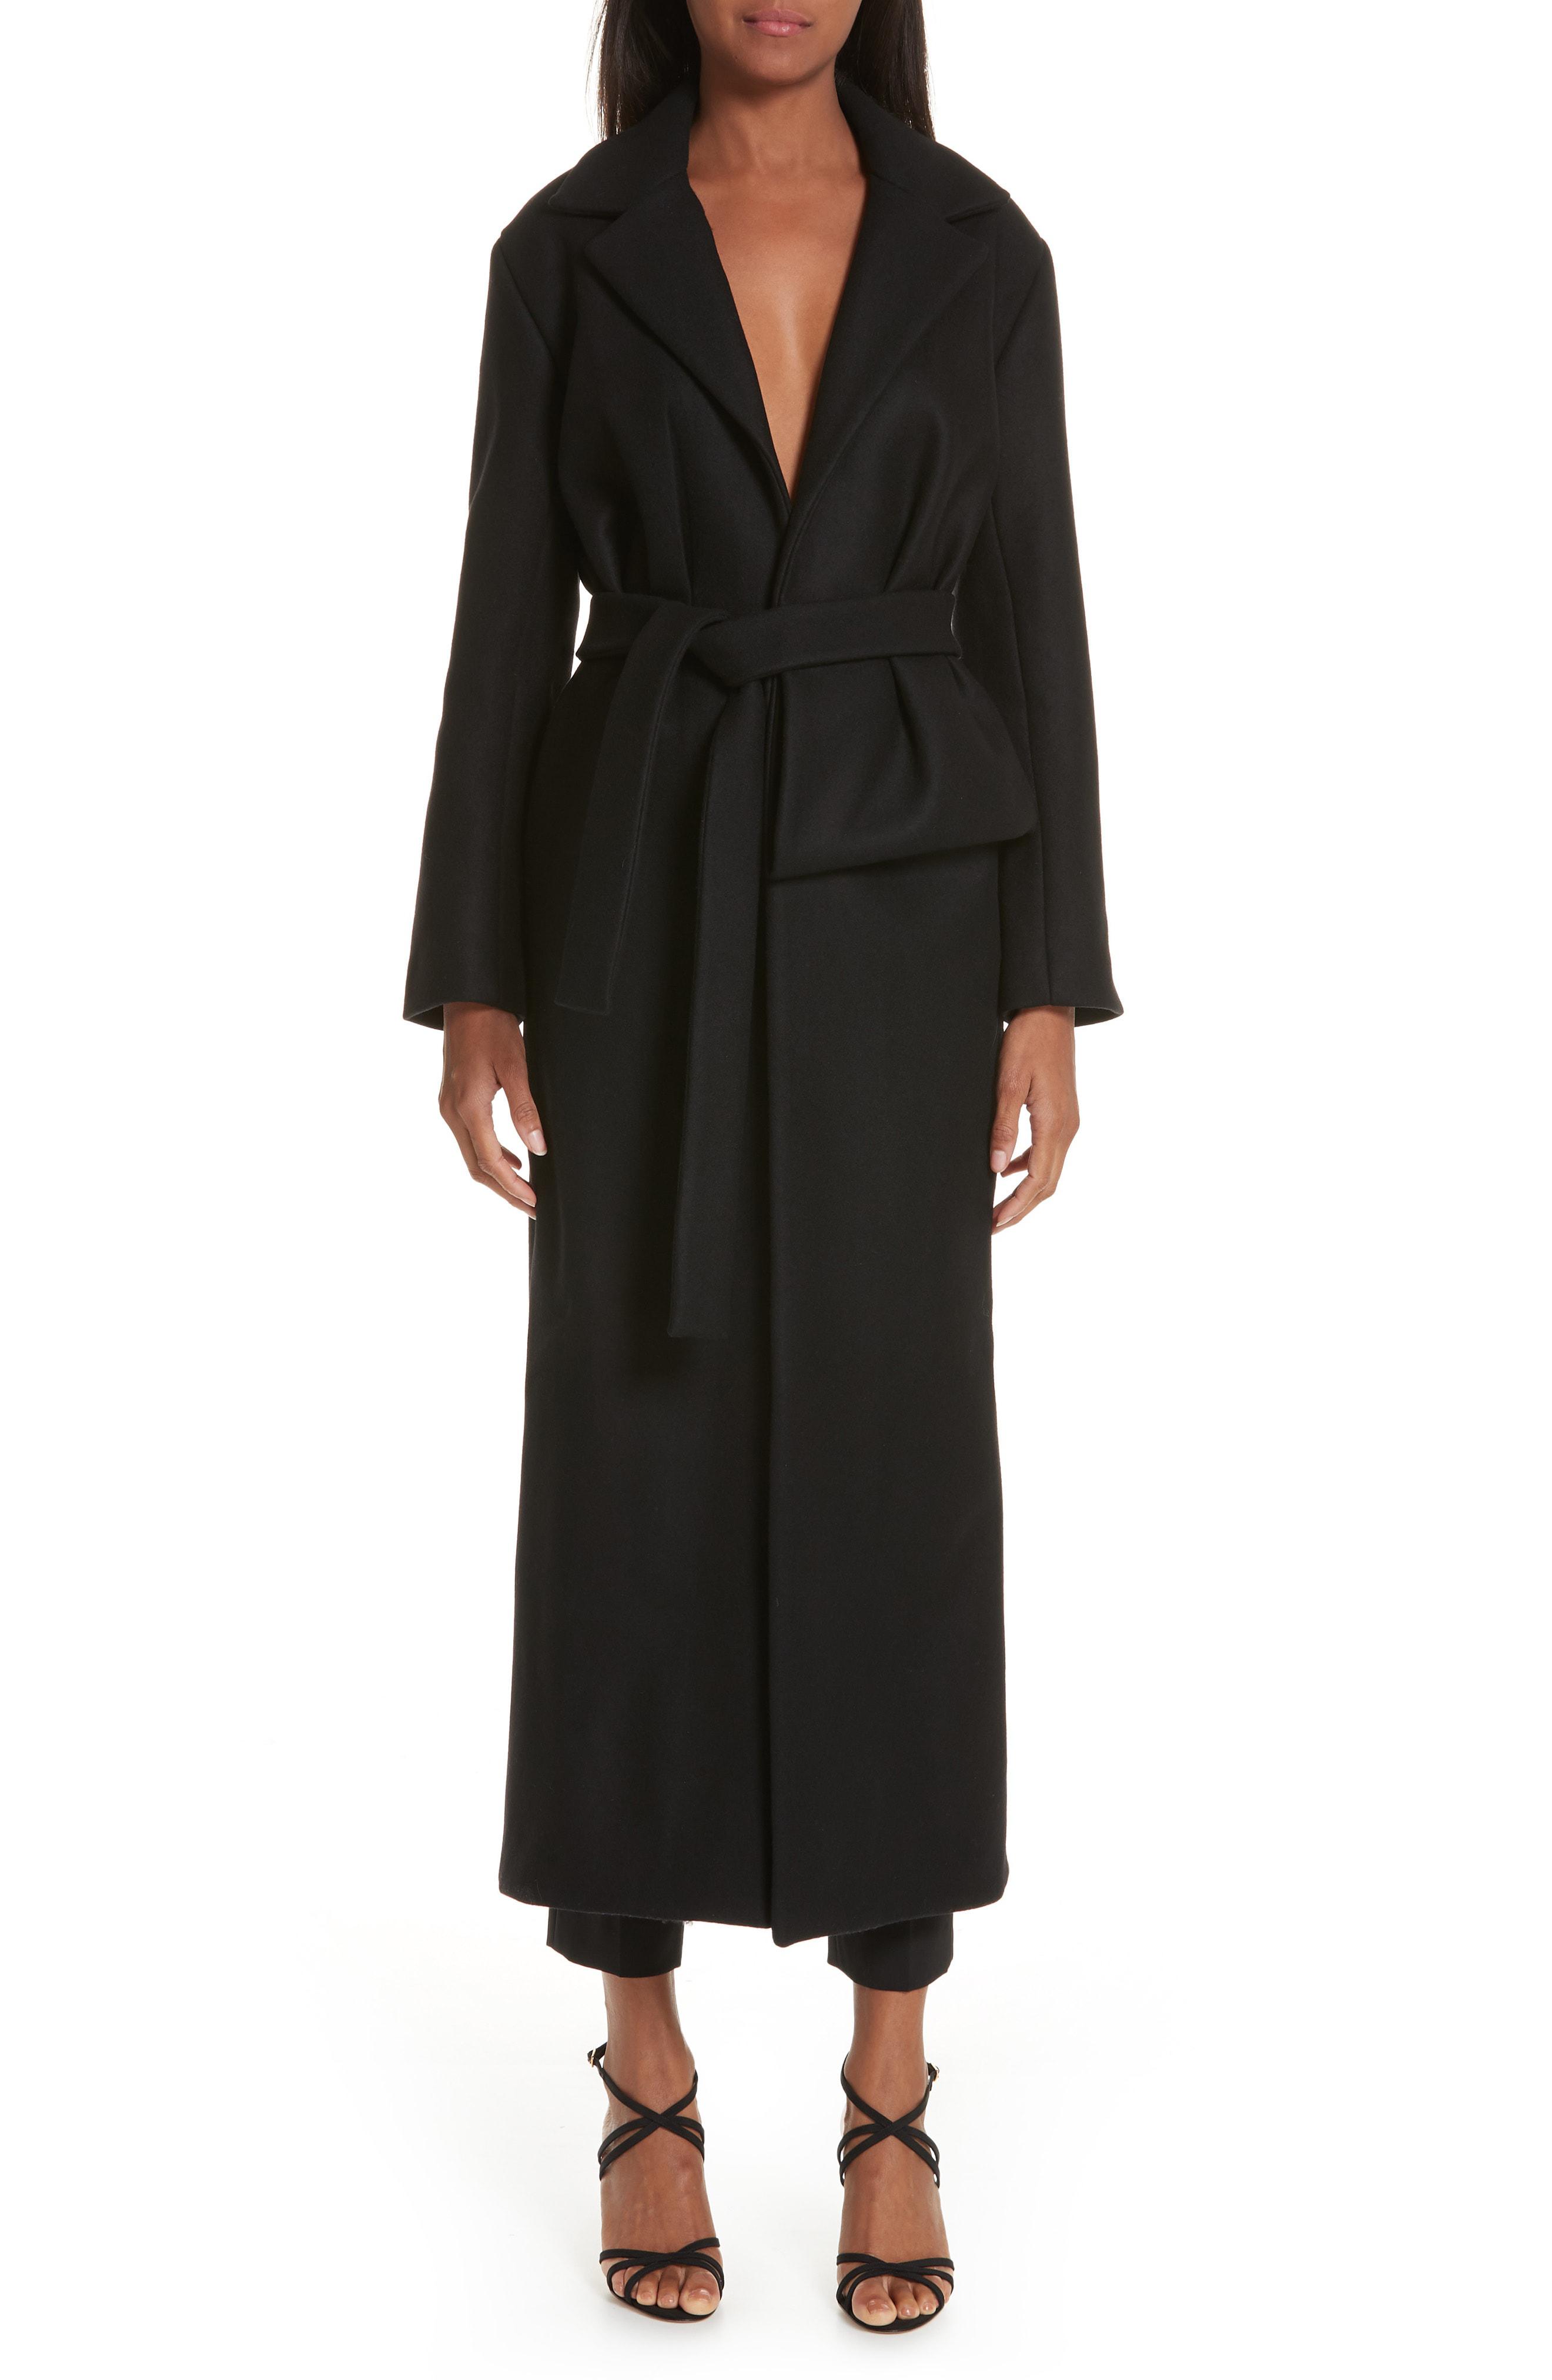 Jacquemus Le Manteau Aissa Belted Wool Blend Coat in Black - Lyst